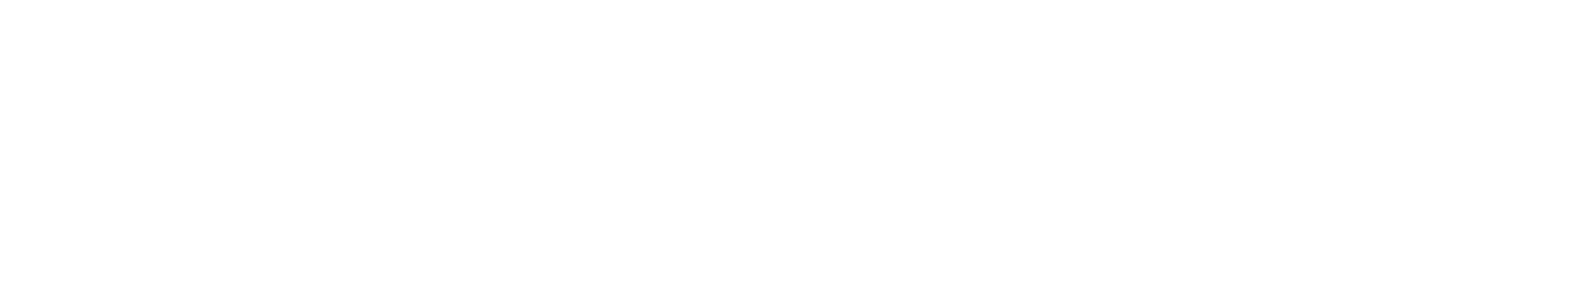 Harness Health Pharmacy logo